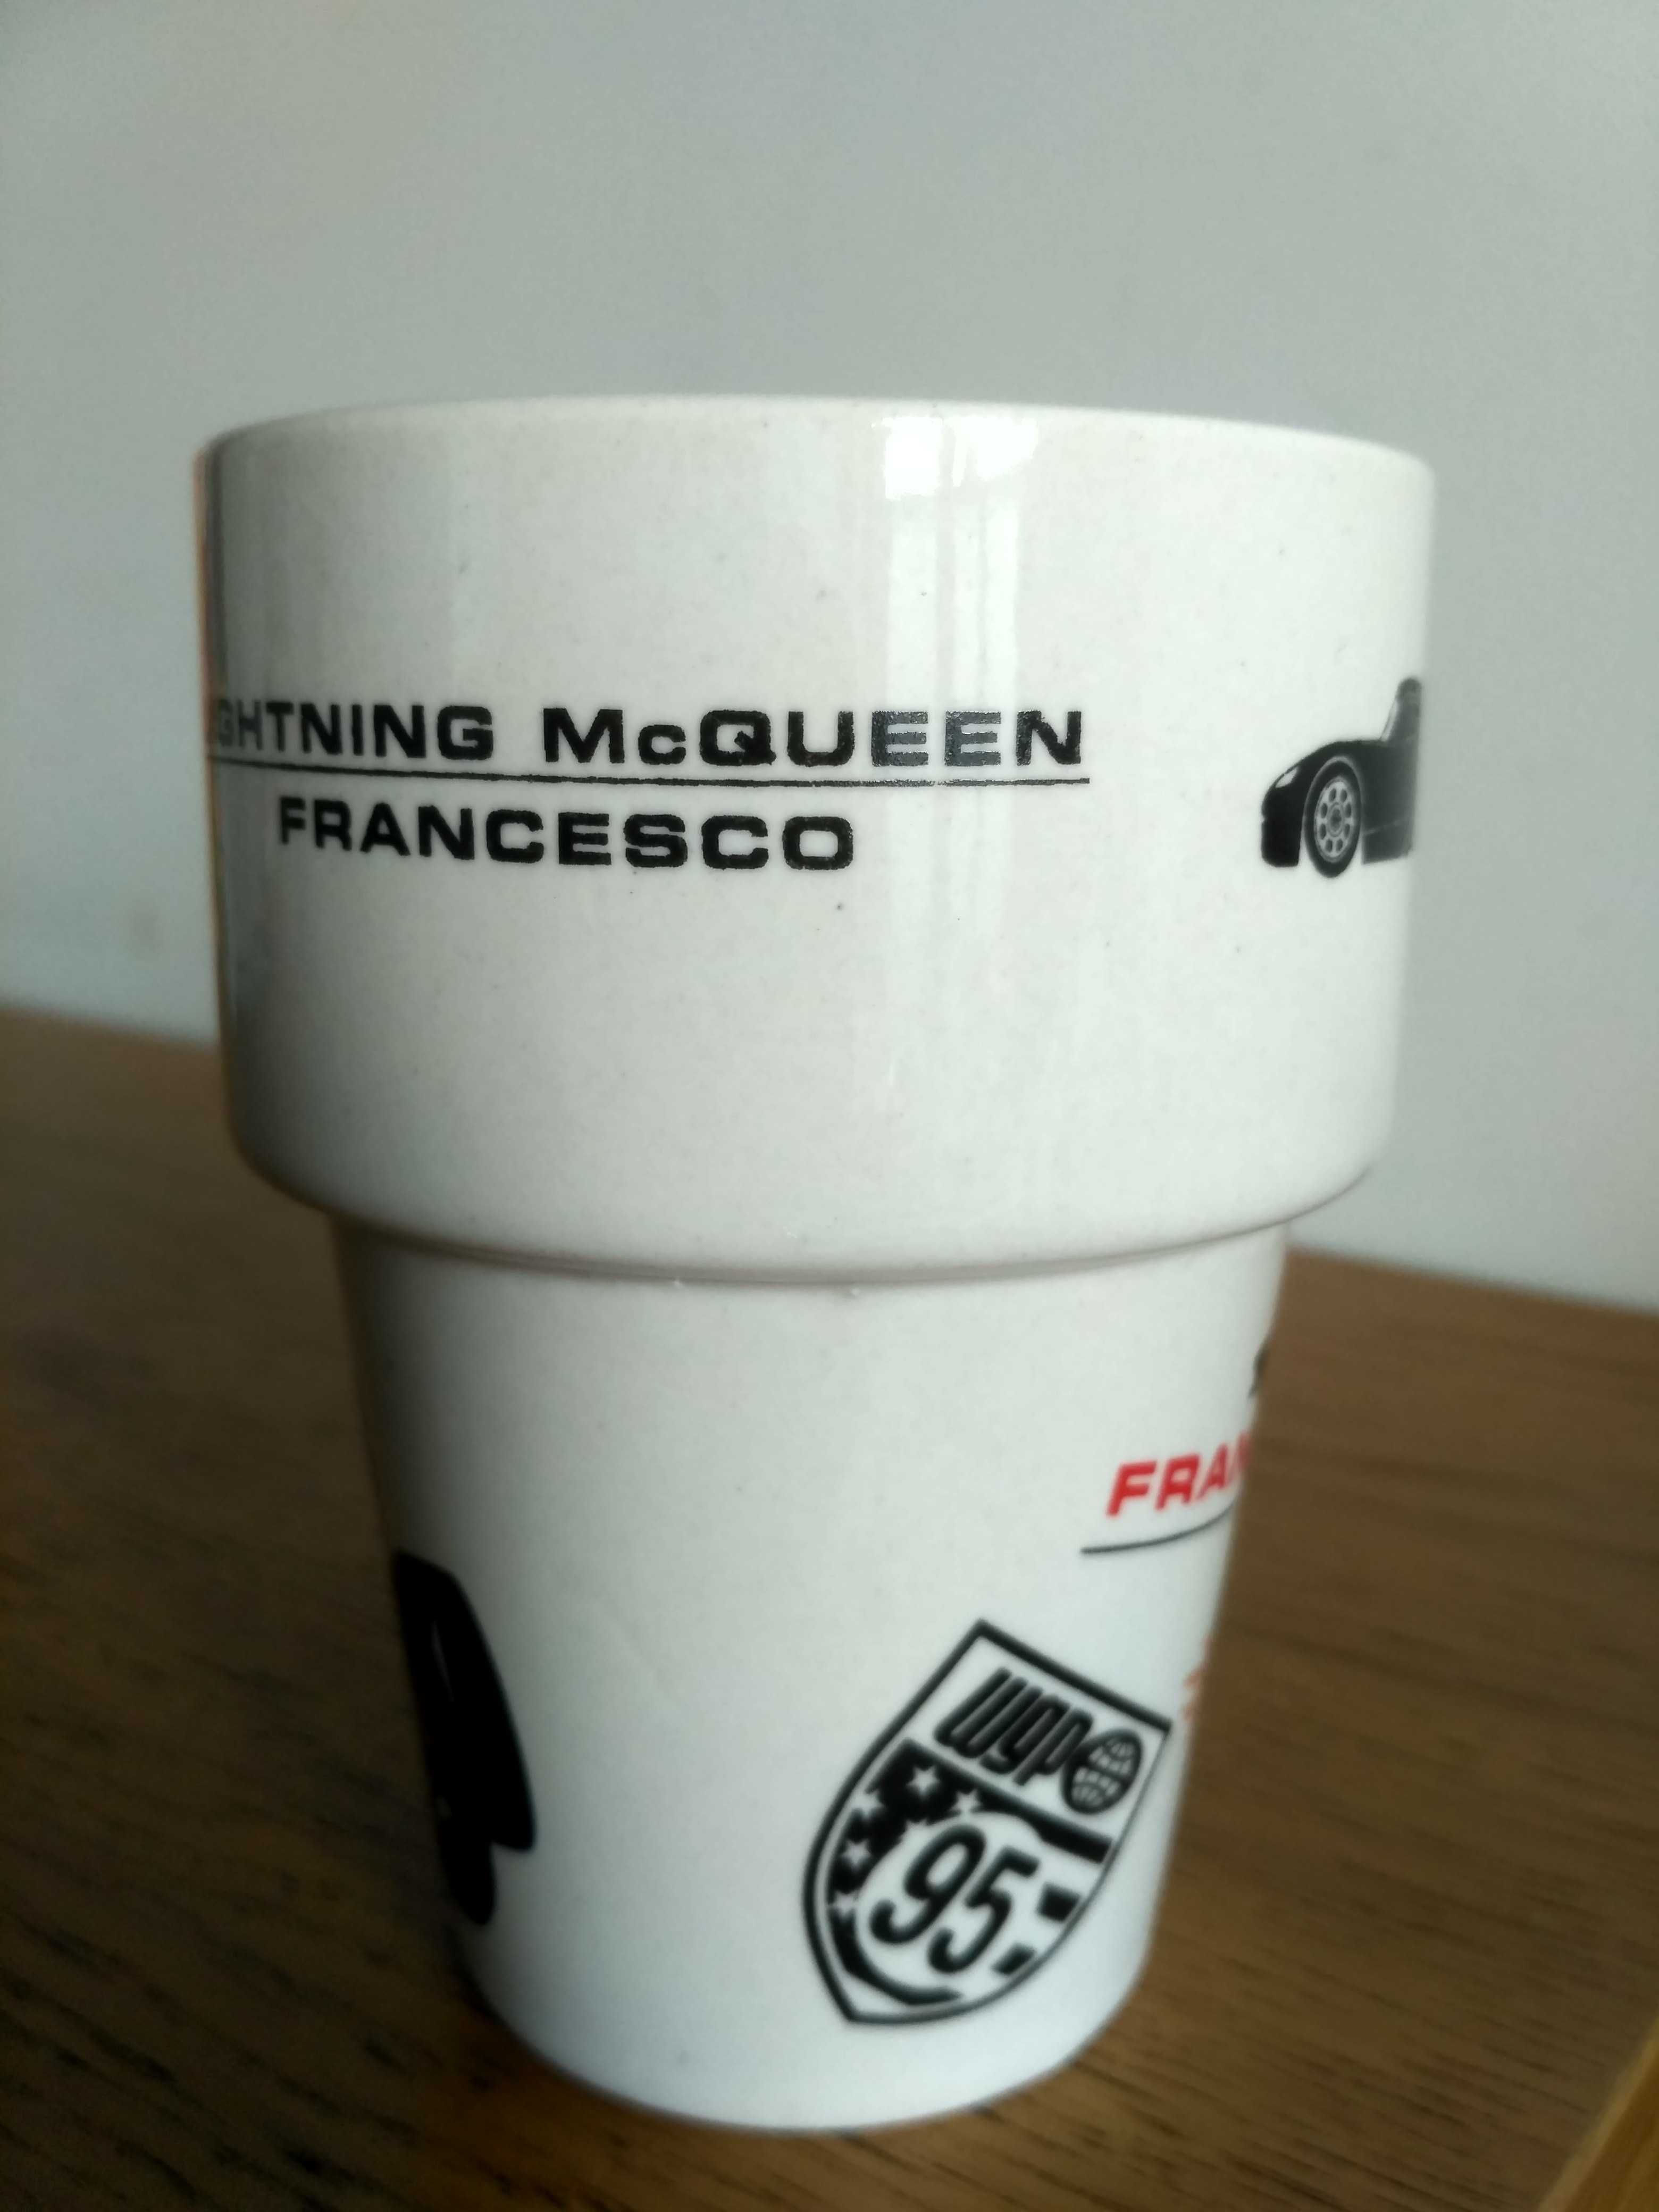 Mały porcelanowy kubek Disney Pixar Cars Zygzak McQueen/Francesco.